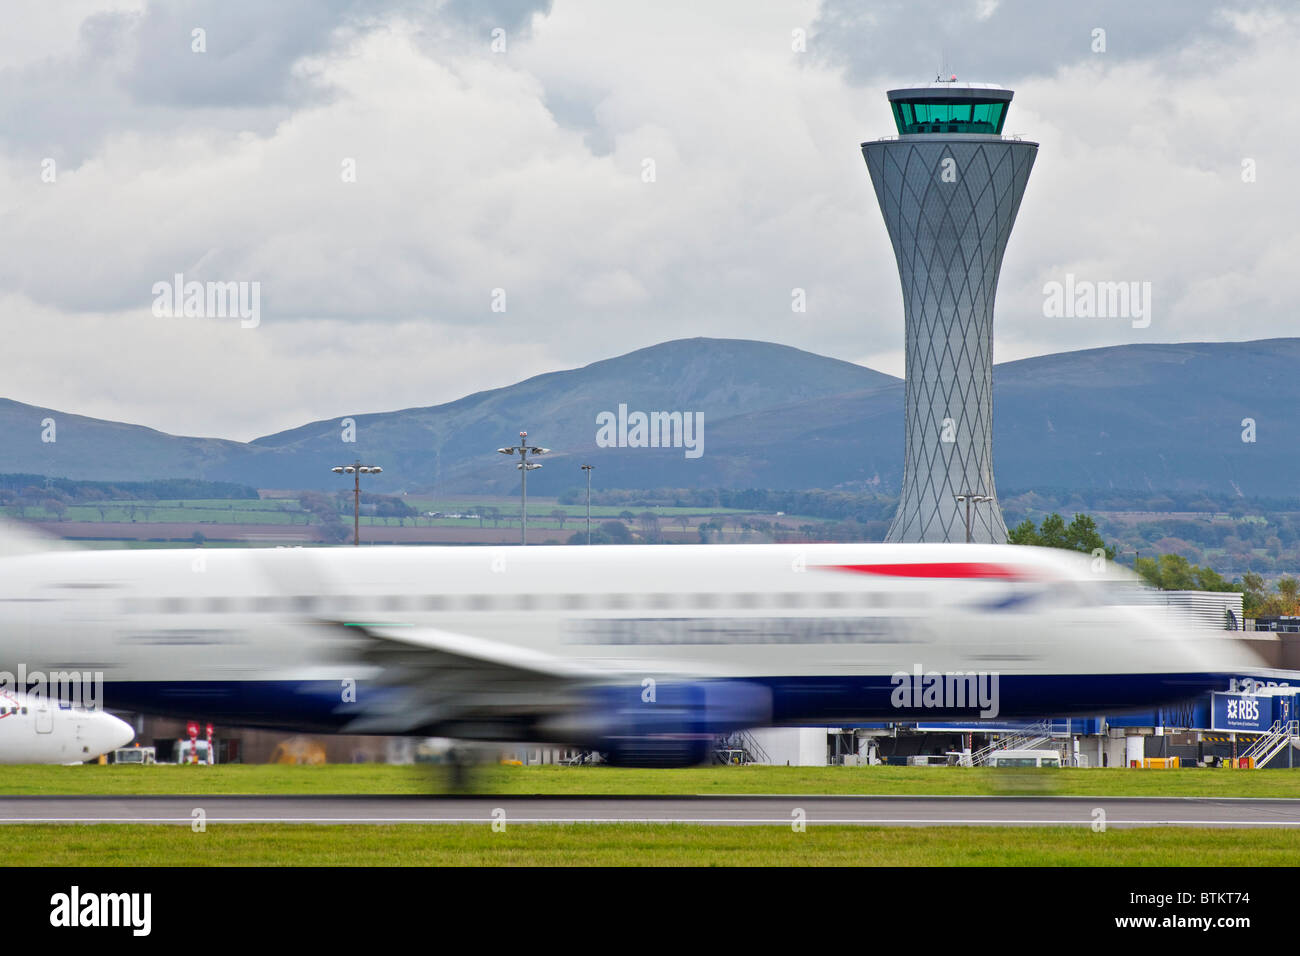 A British Airways (BA) plane blurred on the runway at Edinburgh aiport, Scotland, UK Stock Photo